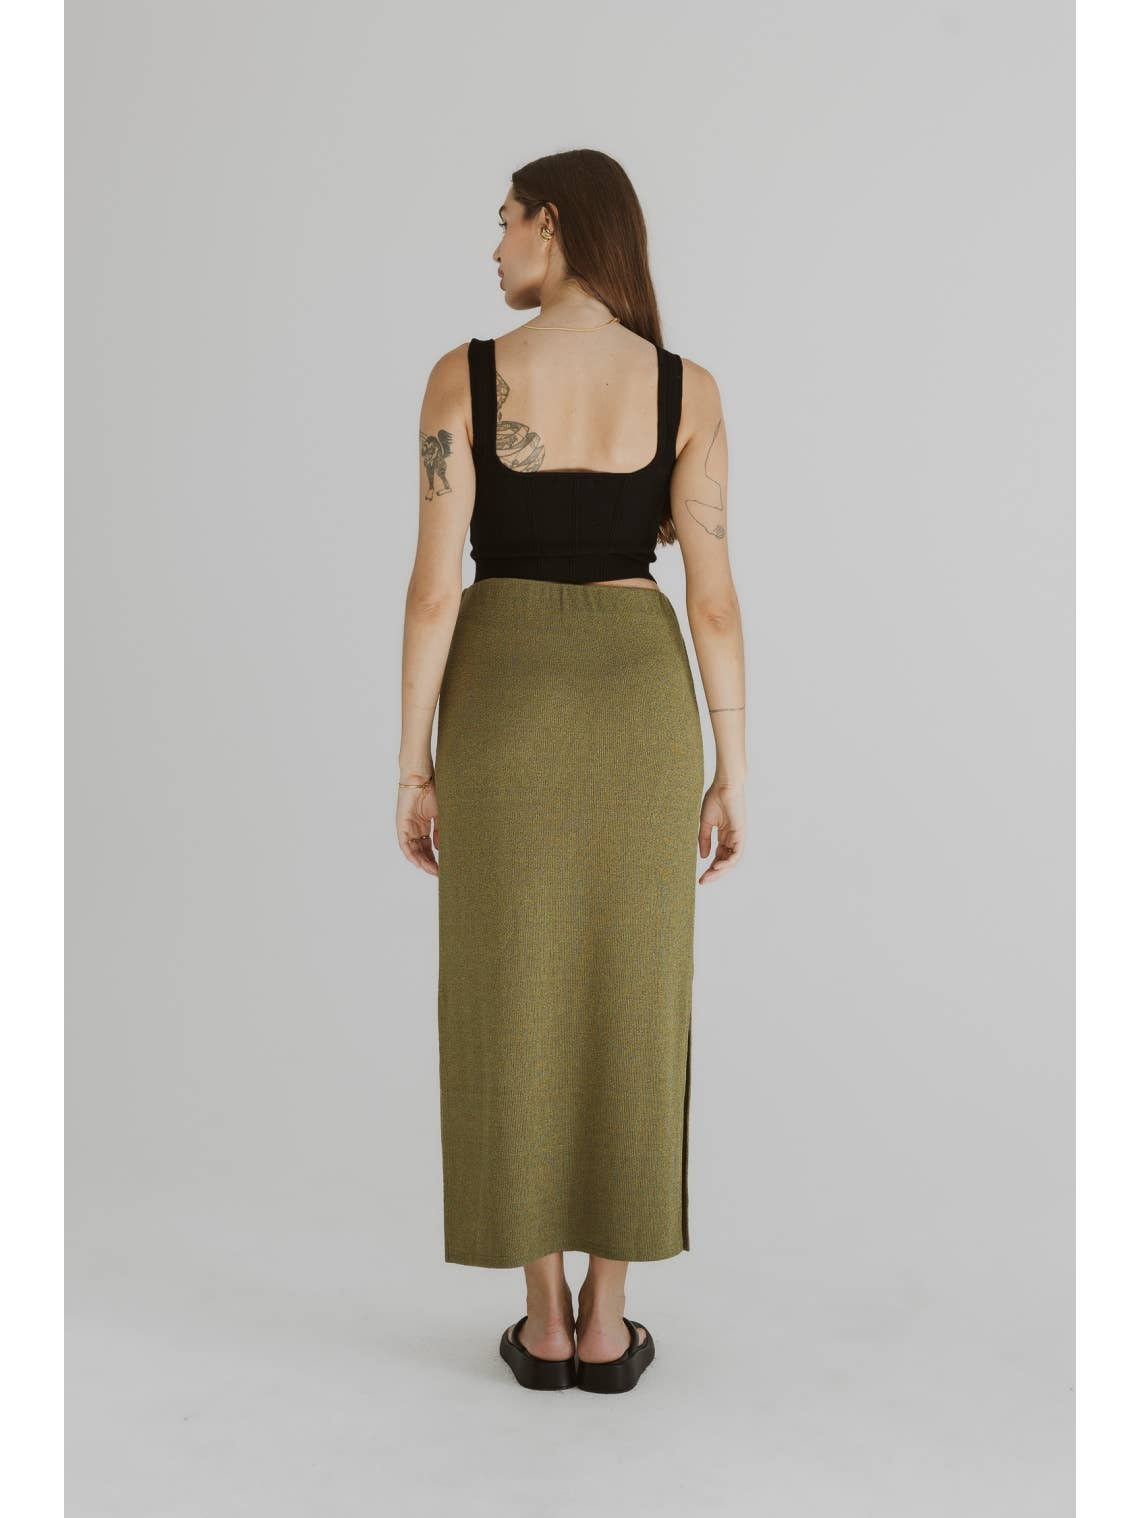 The Lisa Skirt